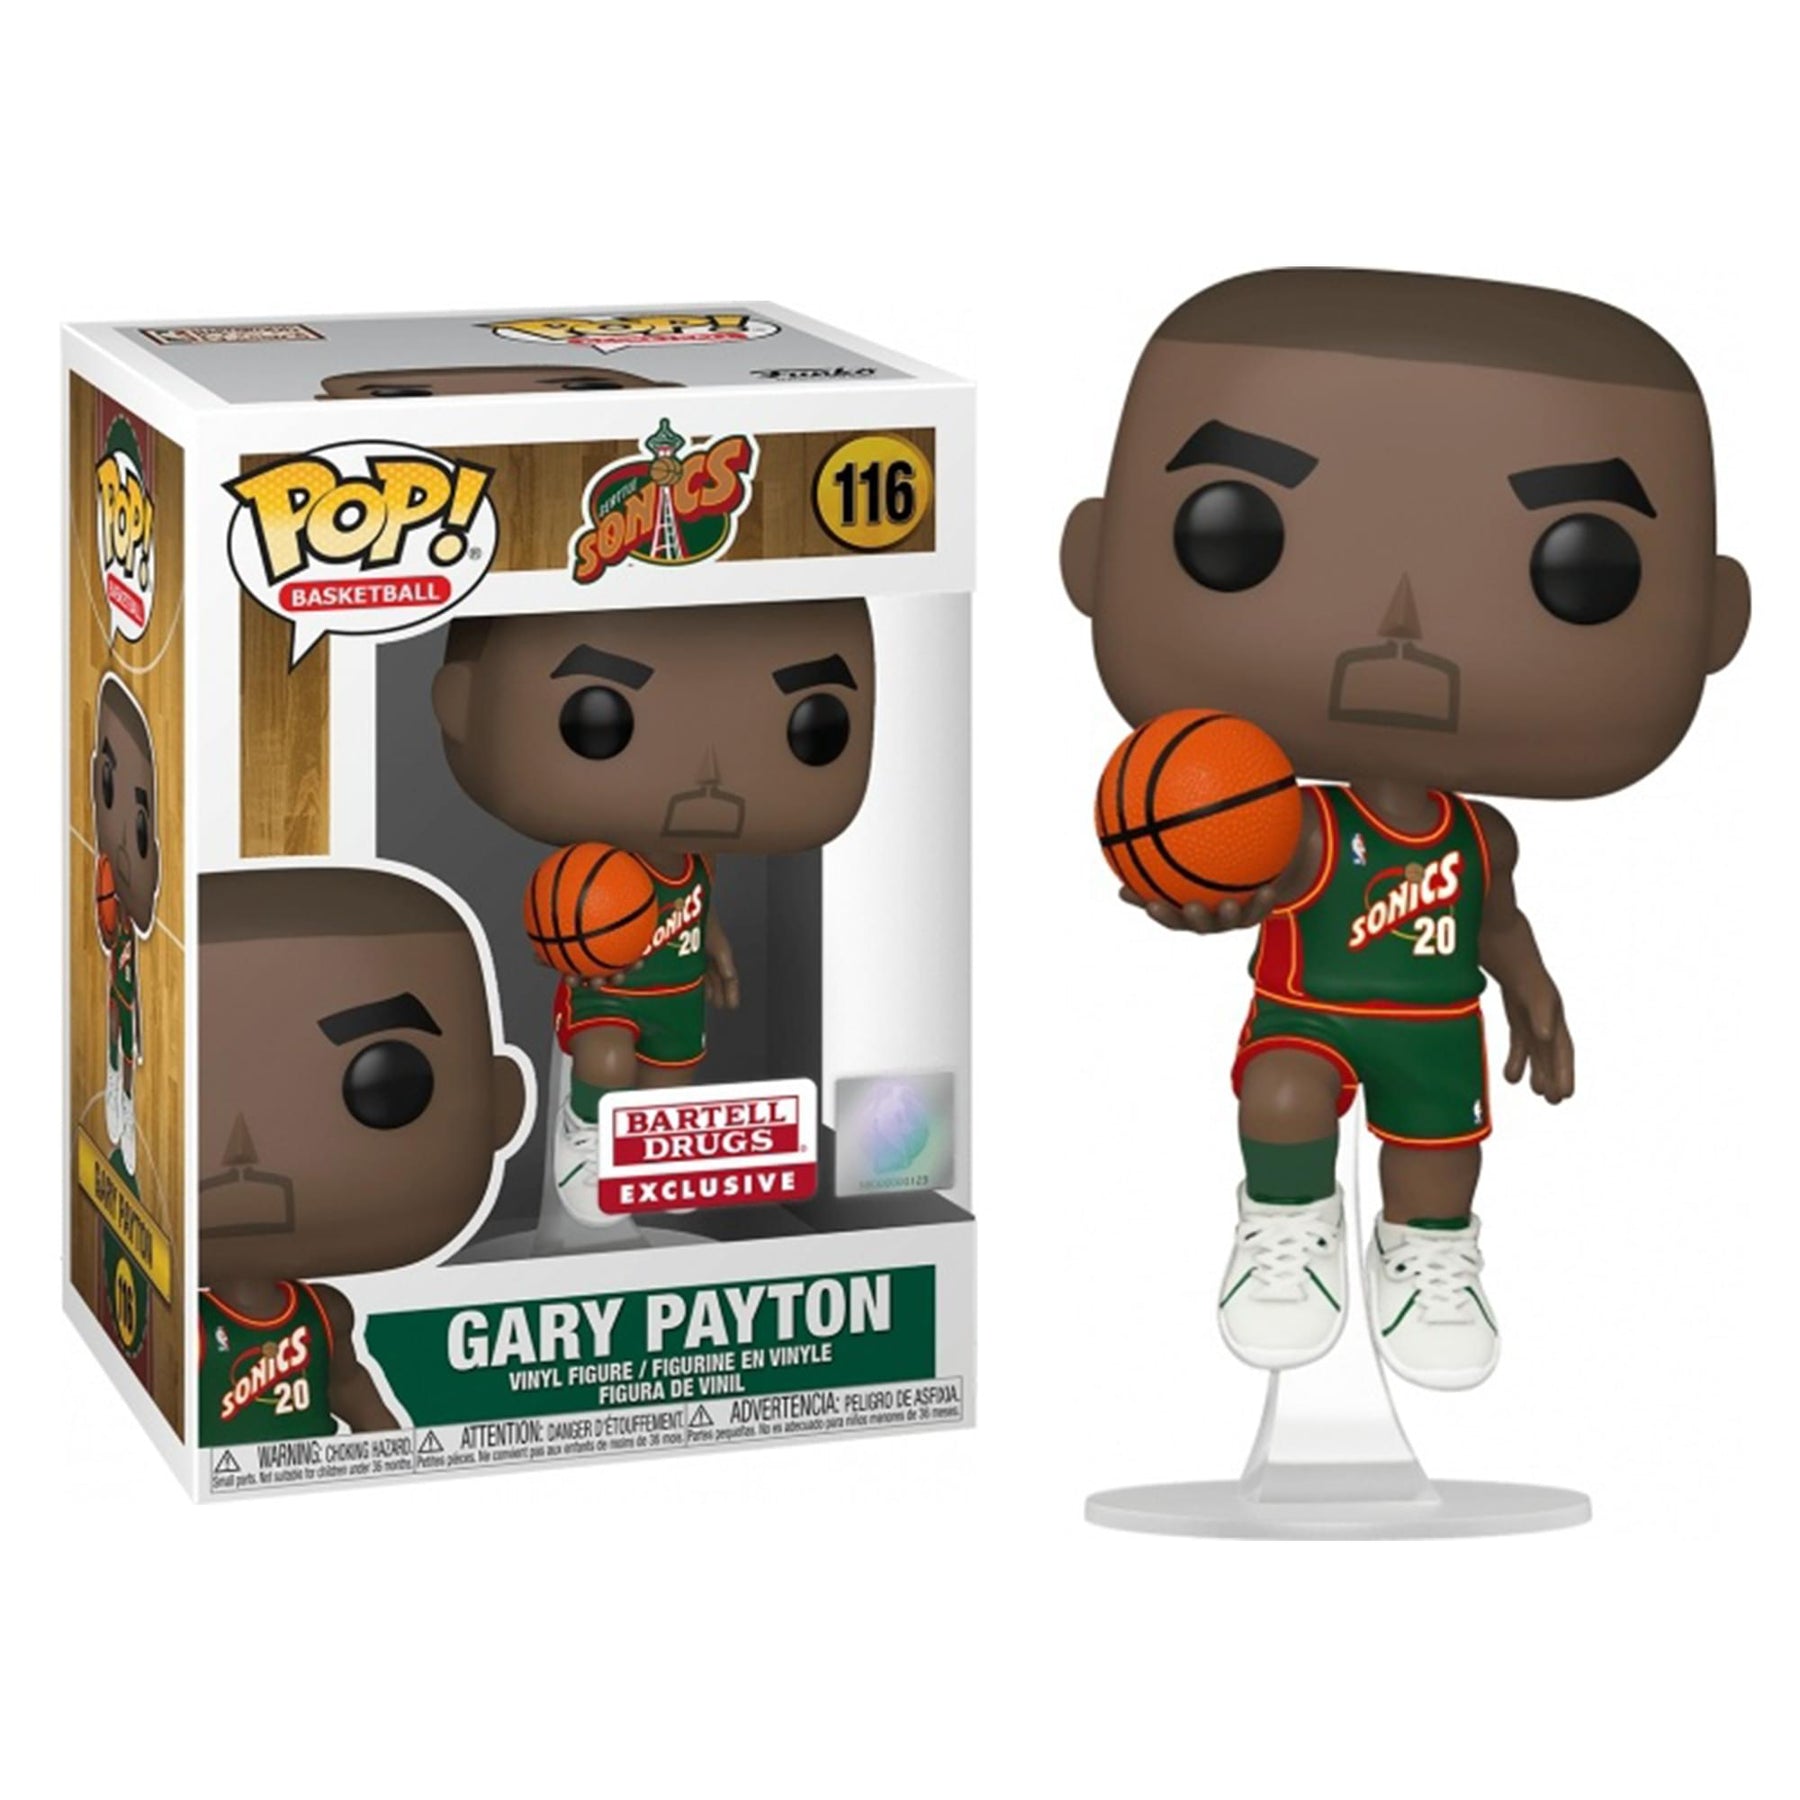 NBA Funko POP | Gary Payton 96 Sonics Road